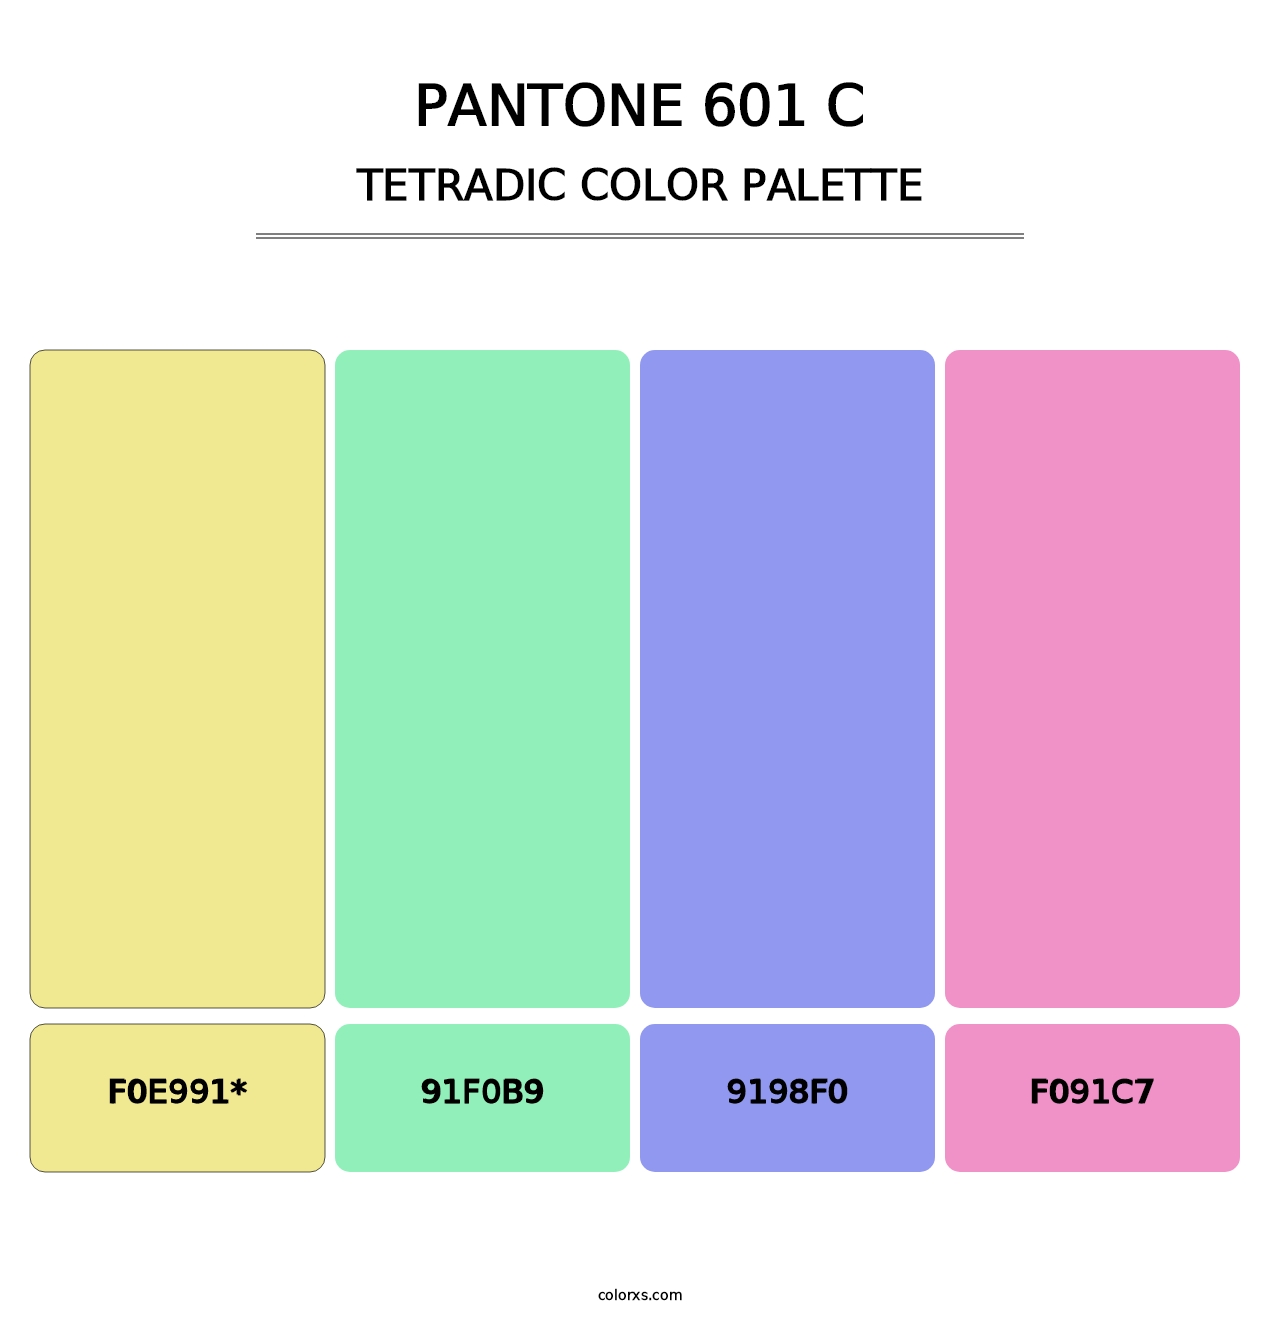 PANTONE 601 C - Tetradic Color Palette